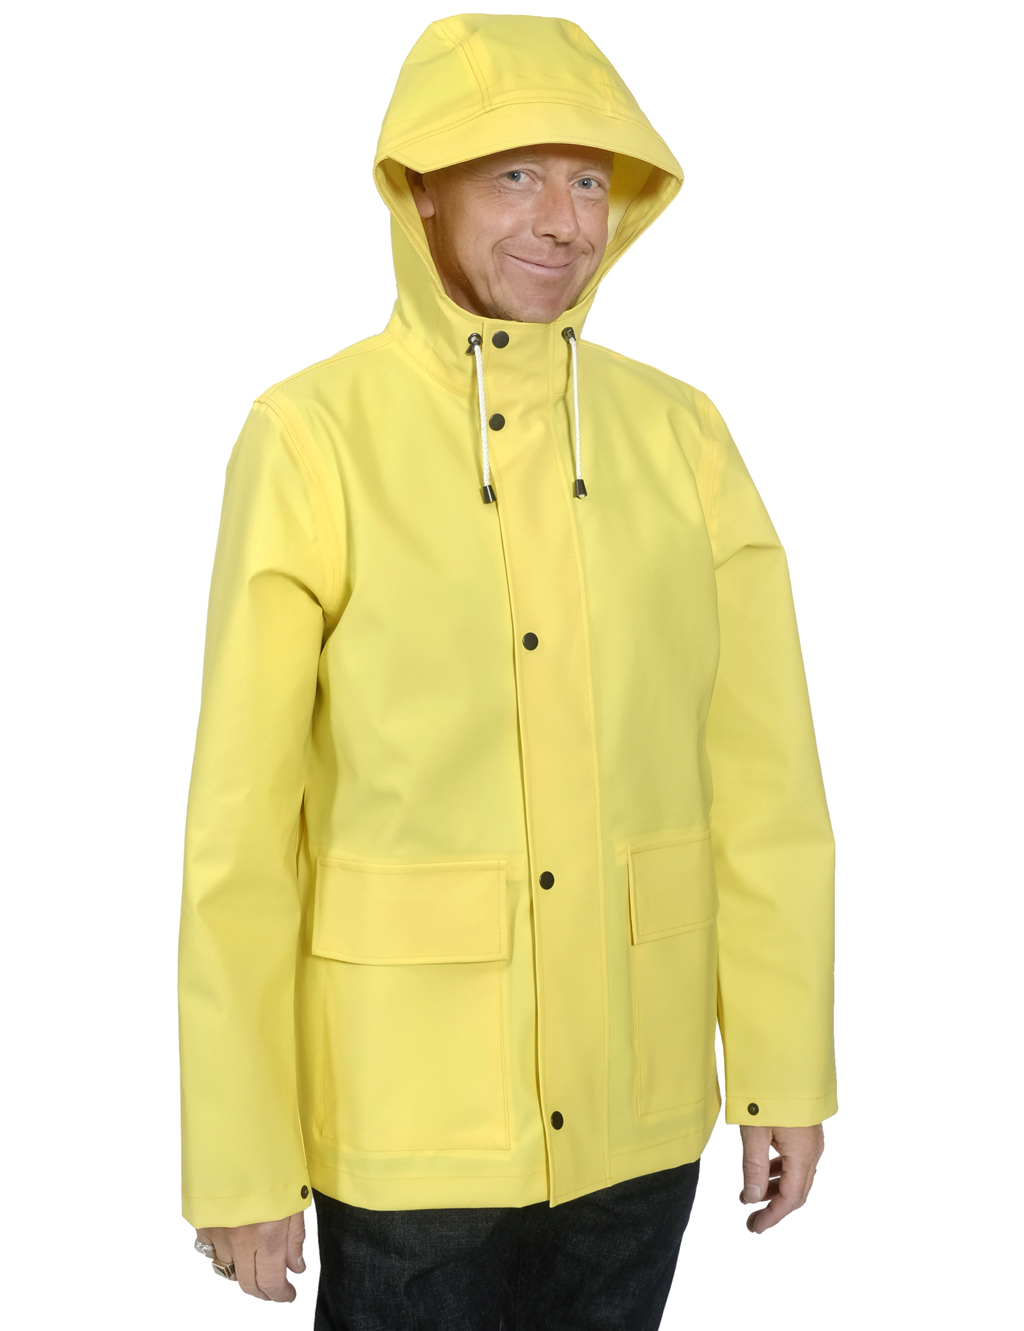 Jeansverket - The Rain Jacket - Yellow